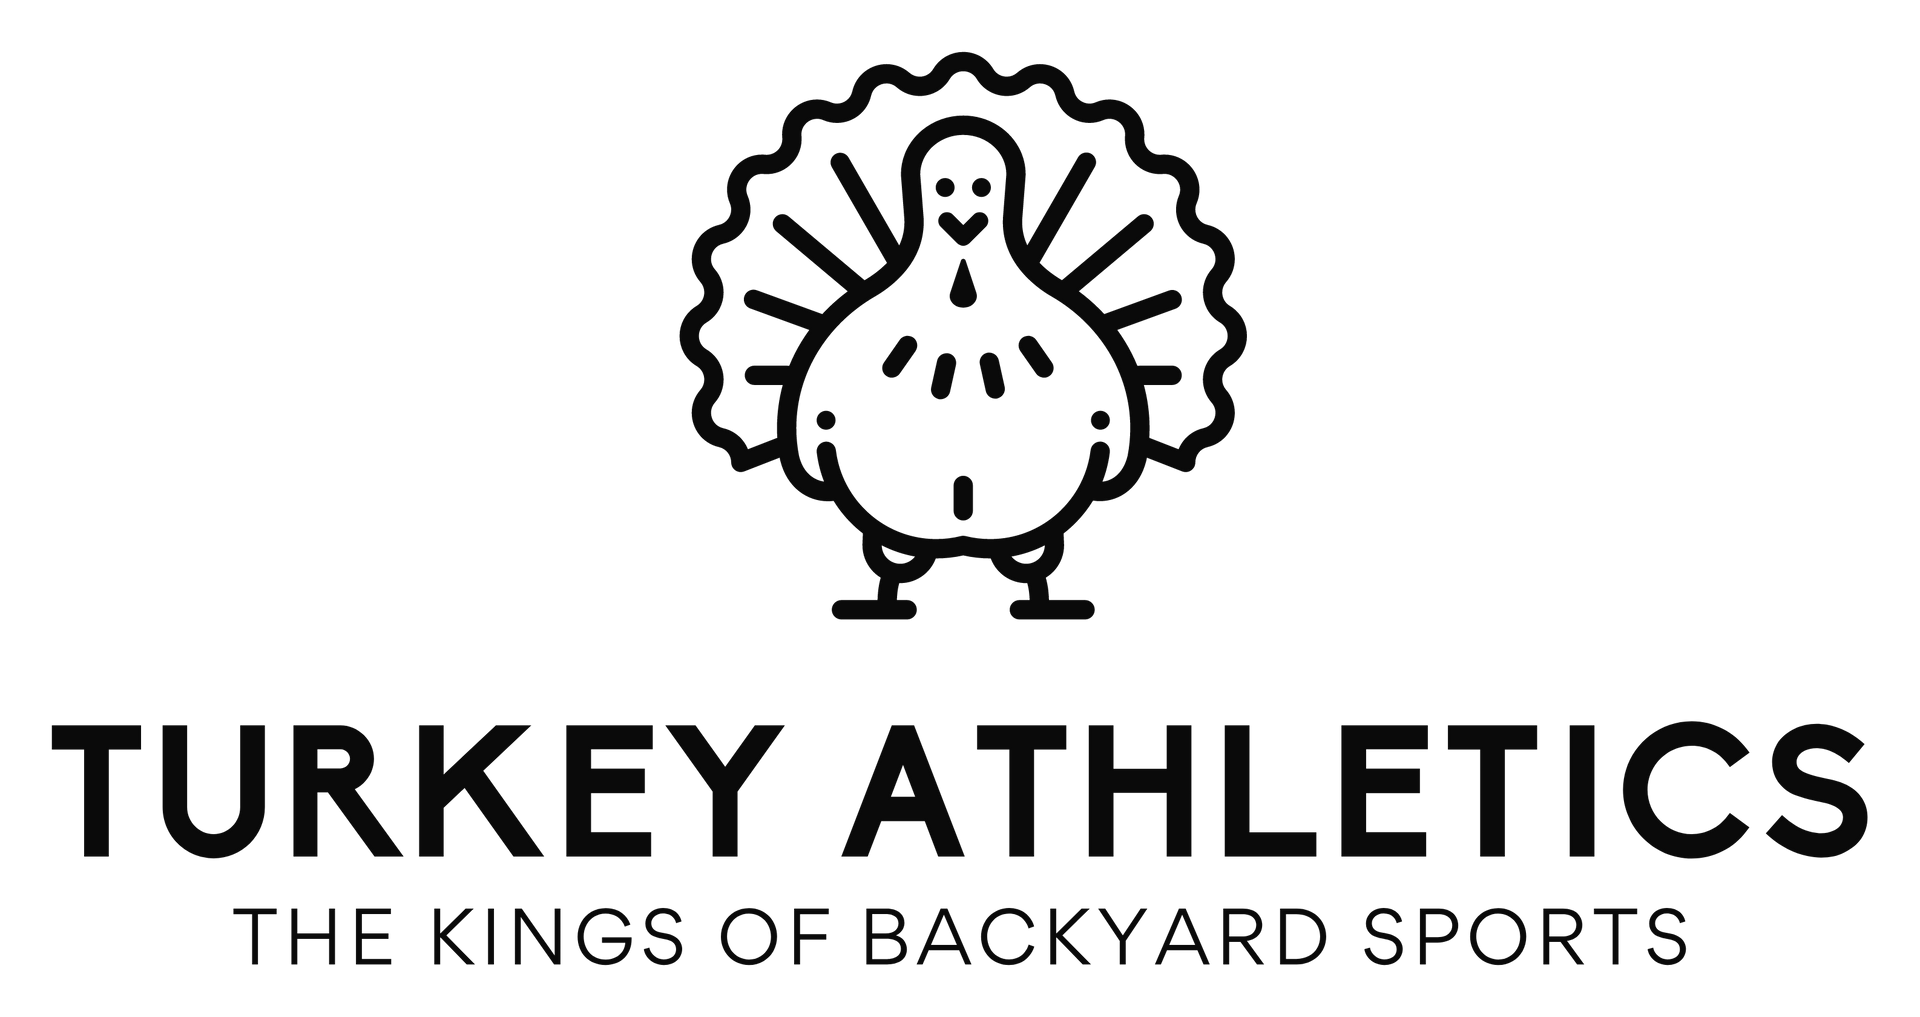 TurkeyBowl LLC
The Kings of Backyard Sports